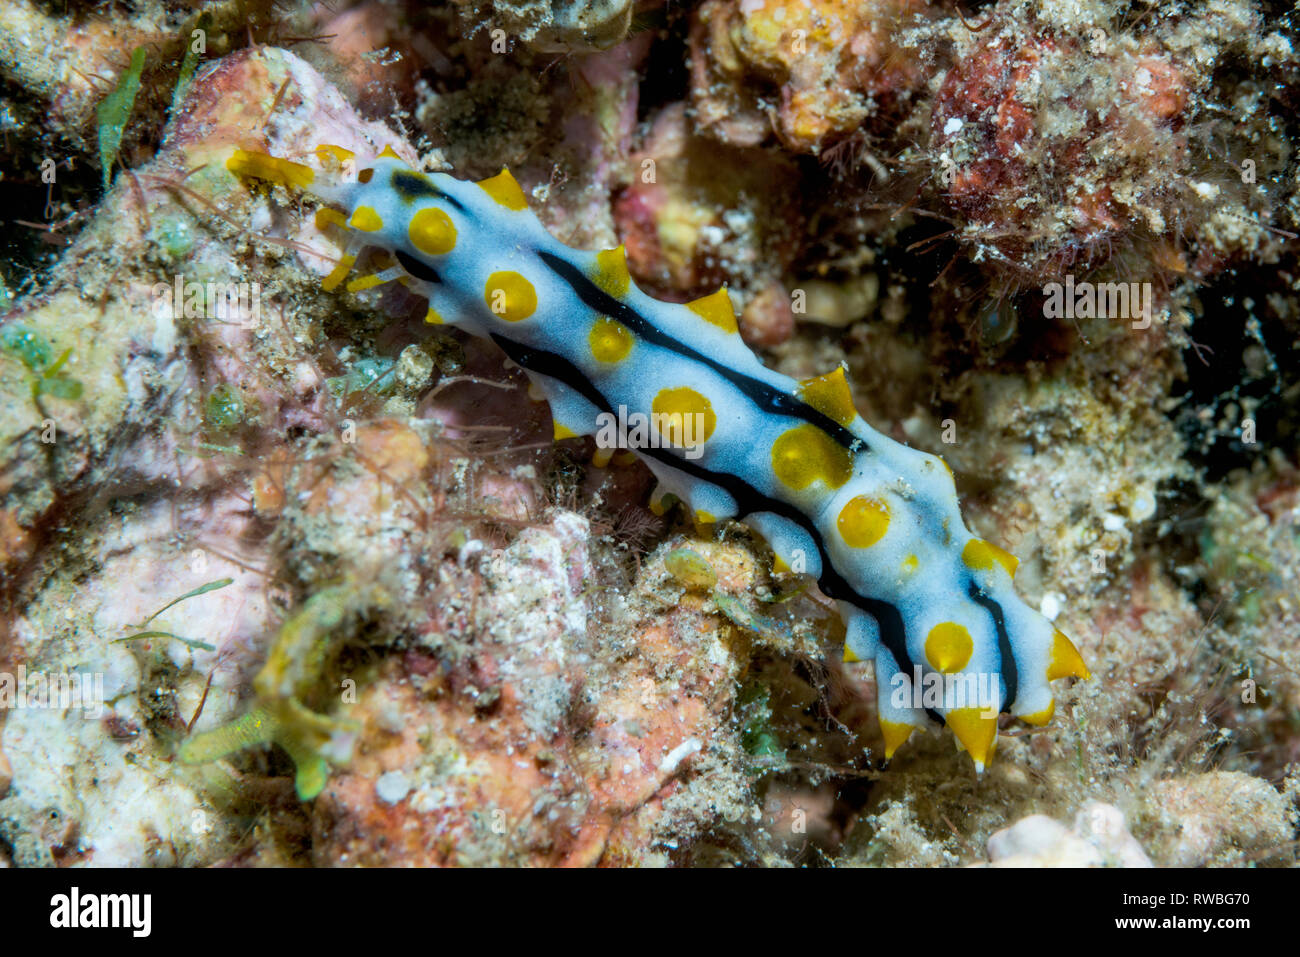 Graeff's Sea cucumber juvenile [Bohadschia graeffei], juvenile mimics nudibranchs like Phyllidia ocellata.  North Sulawesi, Indonesia. Stock Photo